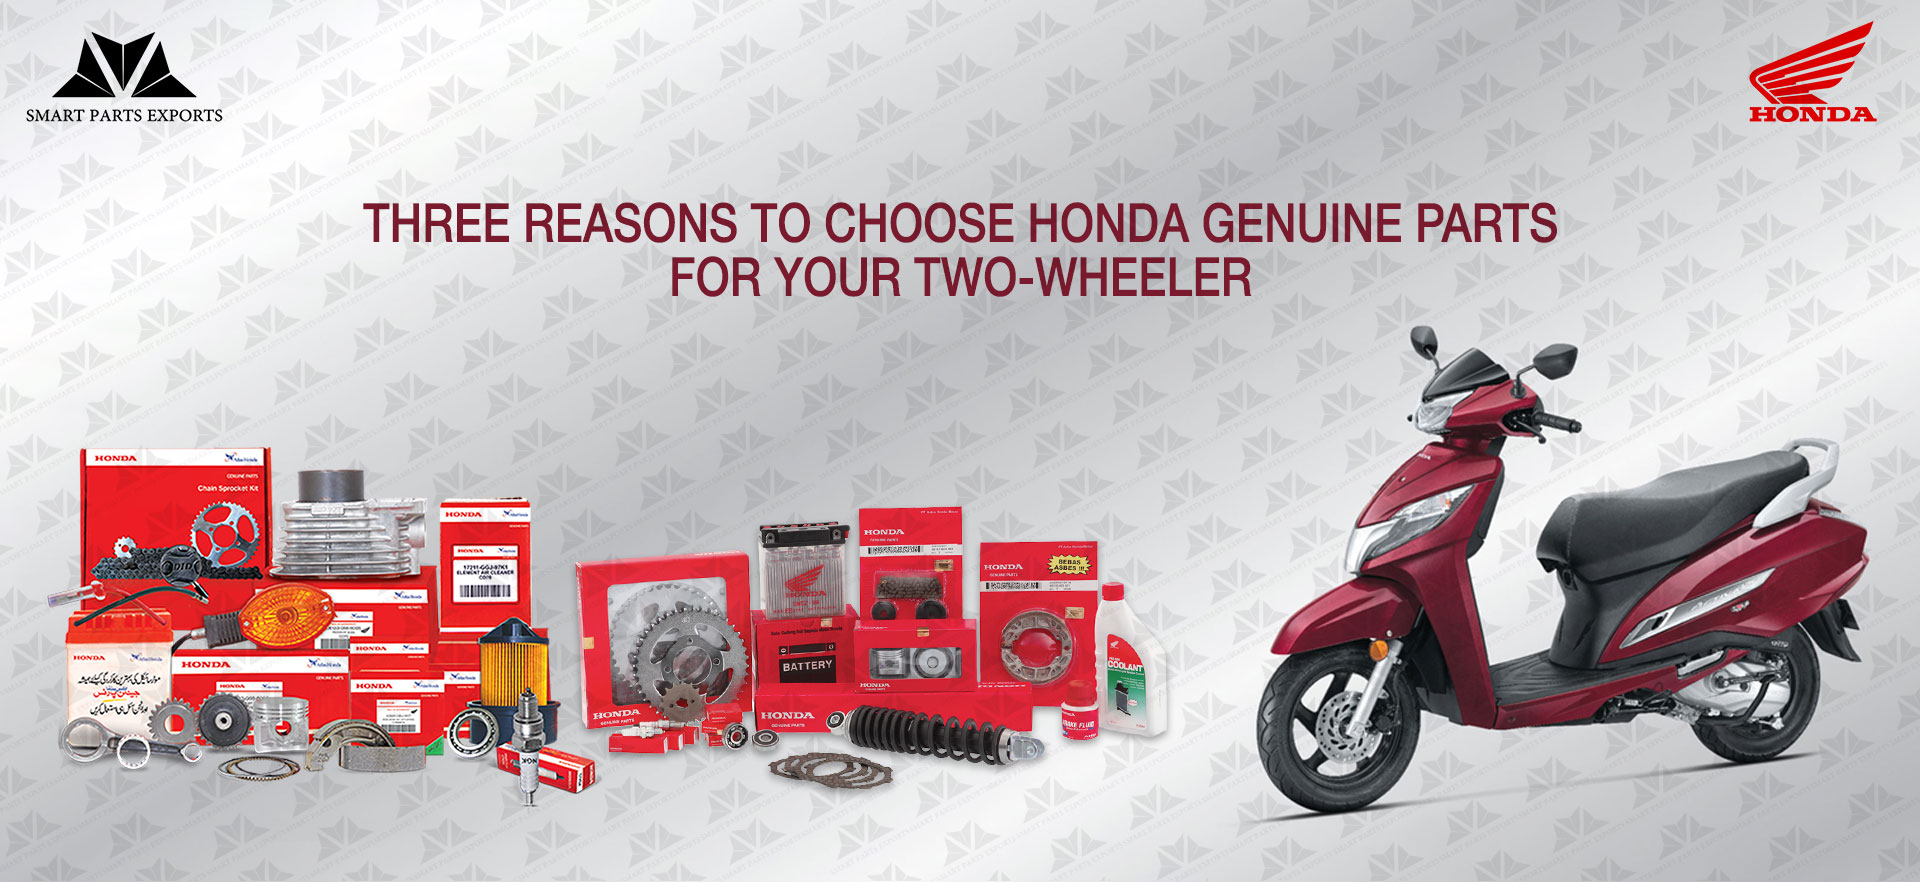 Three Reasons to Choose Honda Genuine Parts for Two-Wheeler